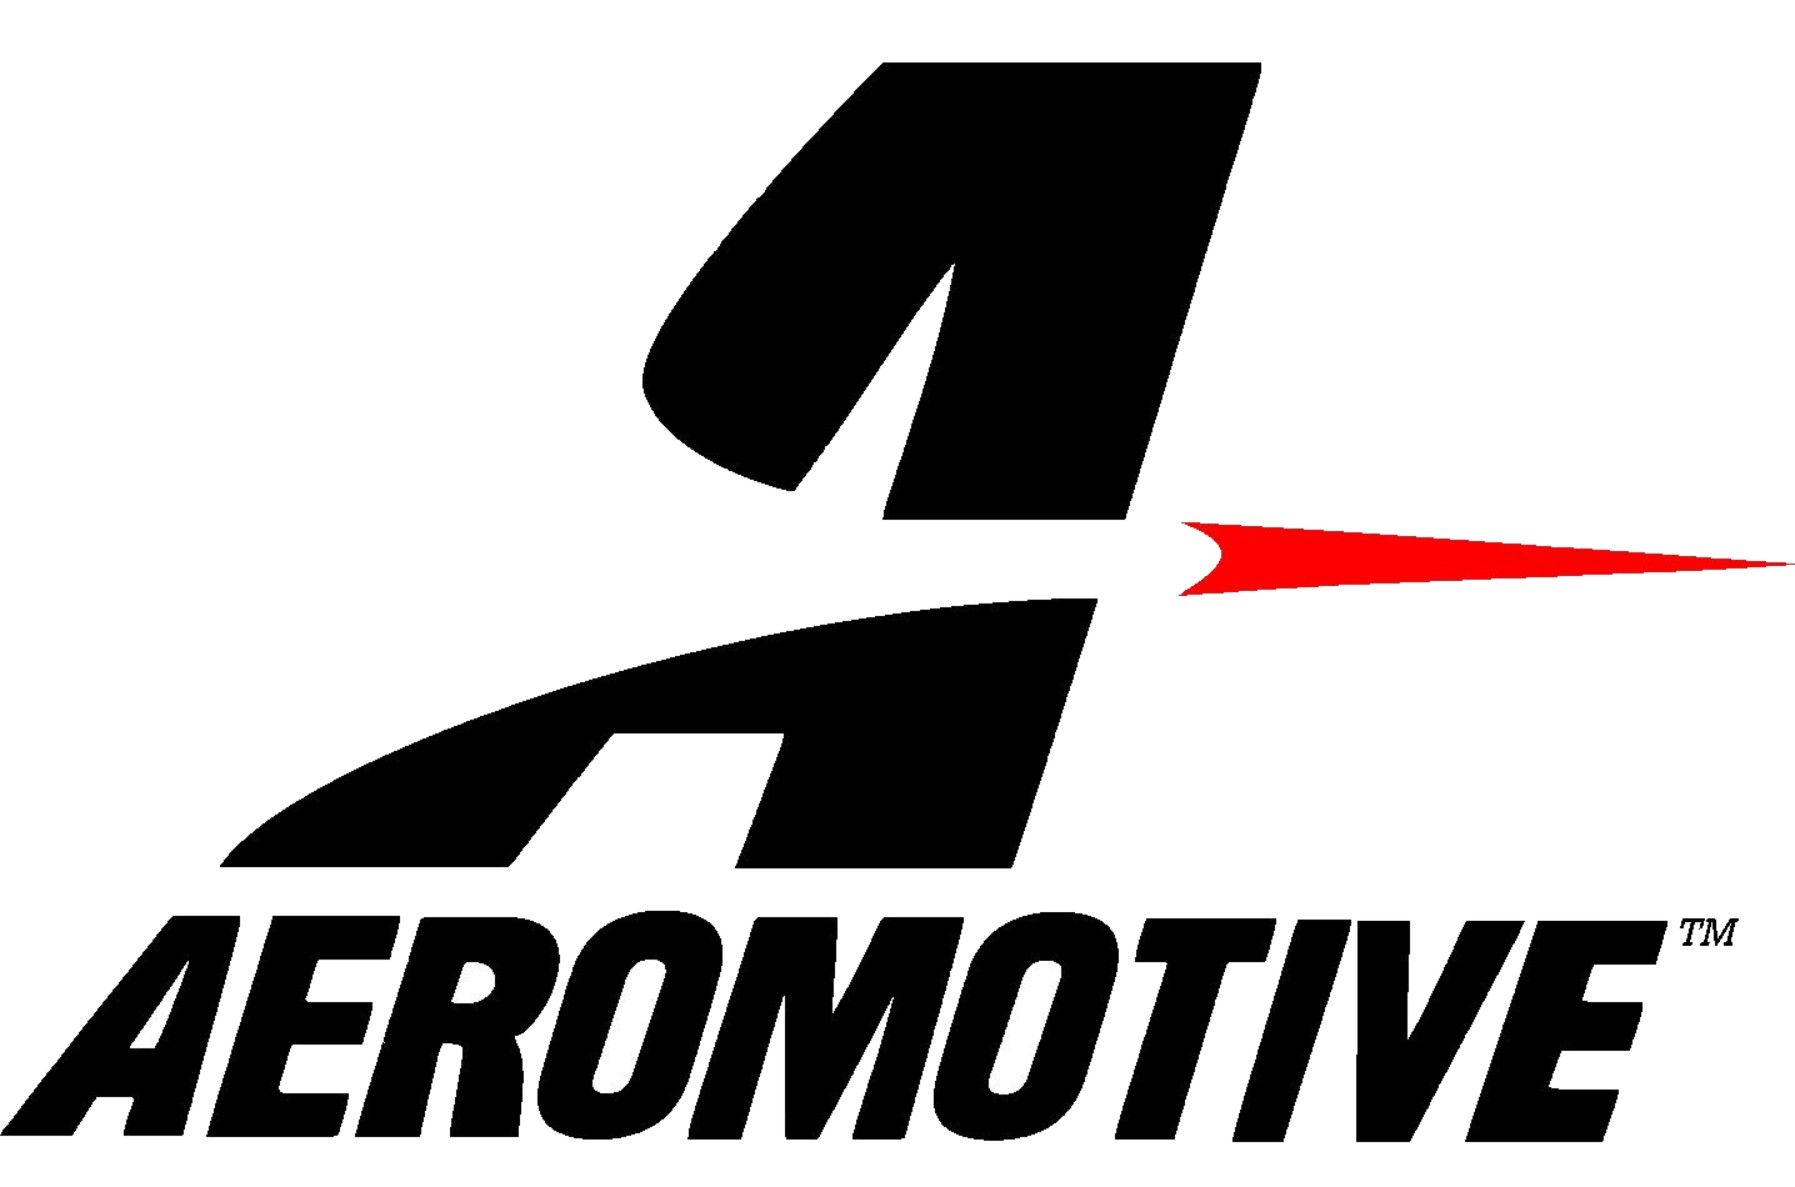 Aeromotive, Inc.